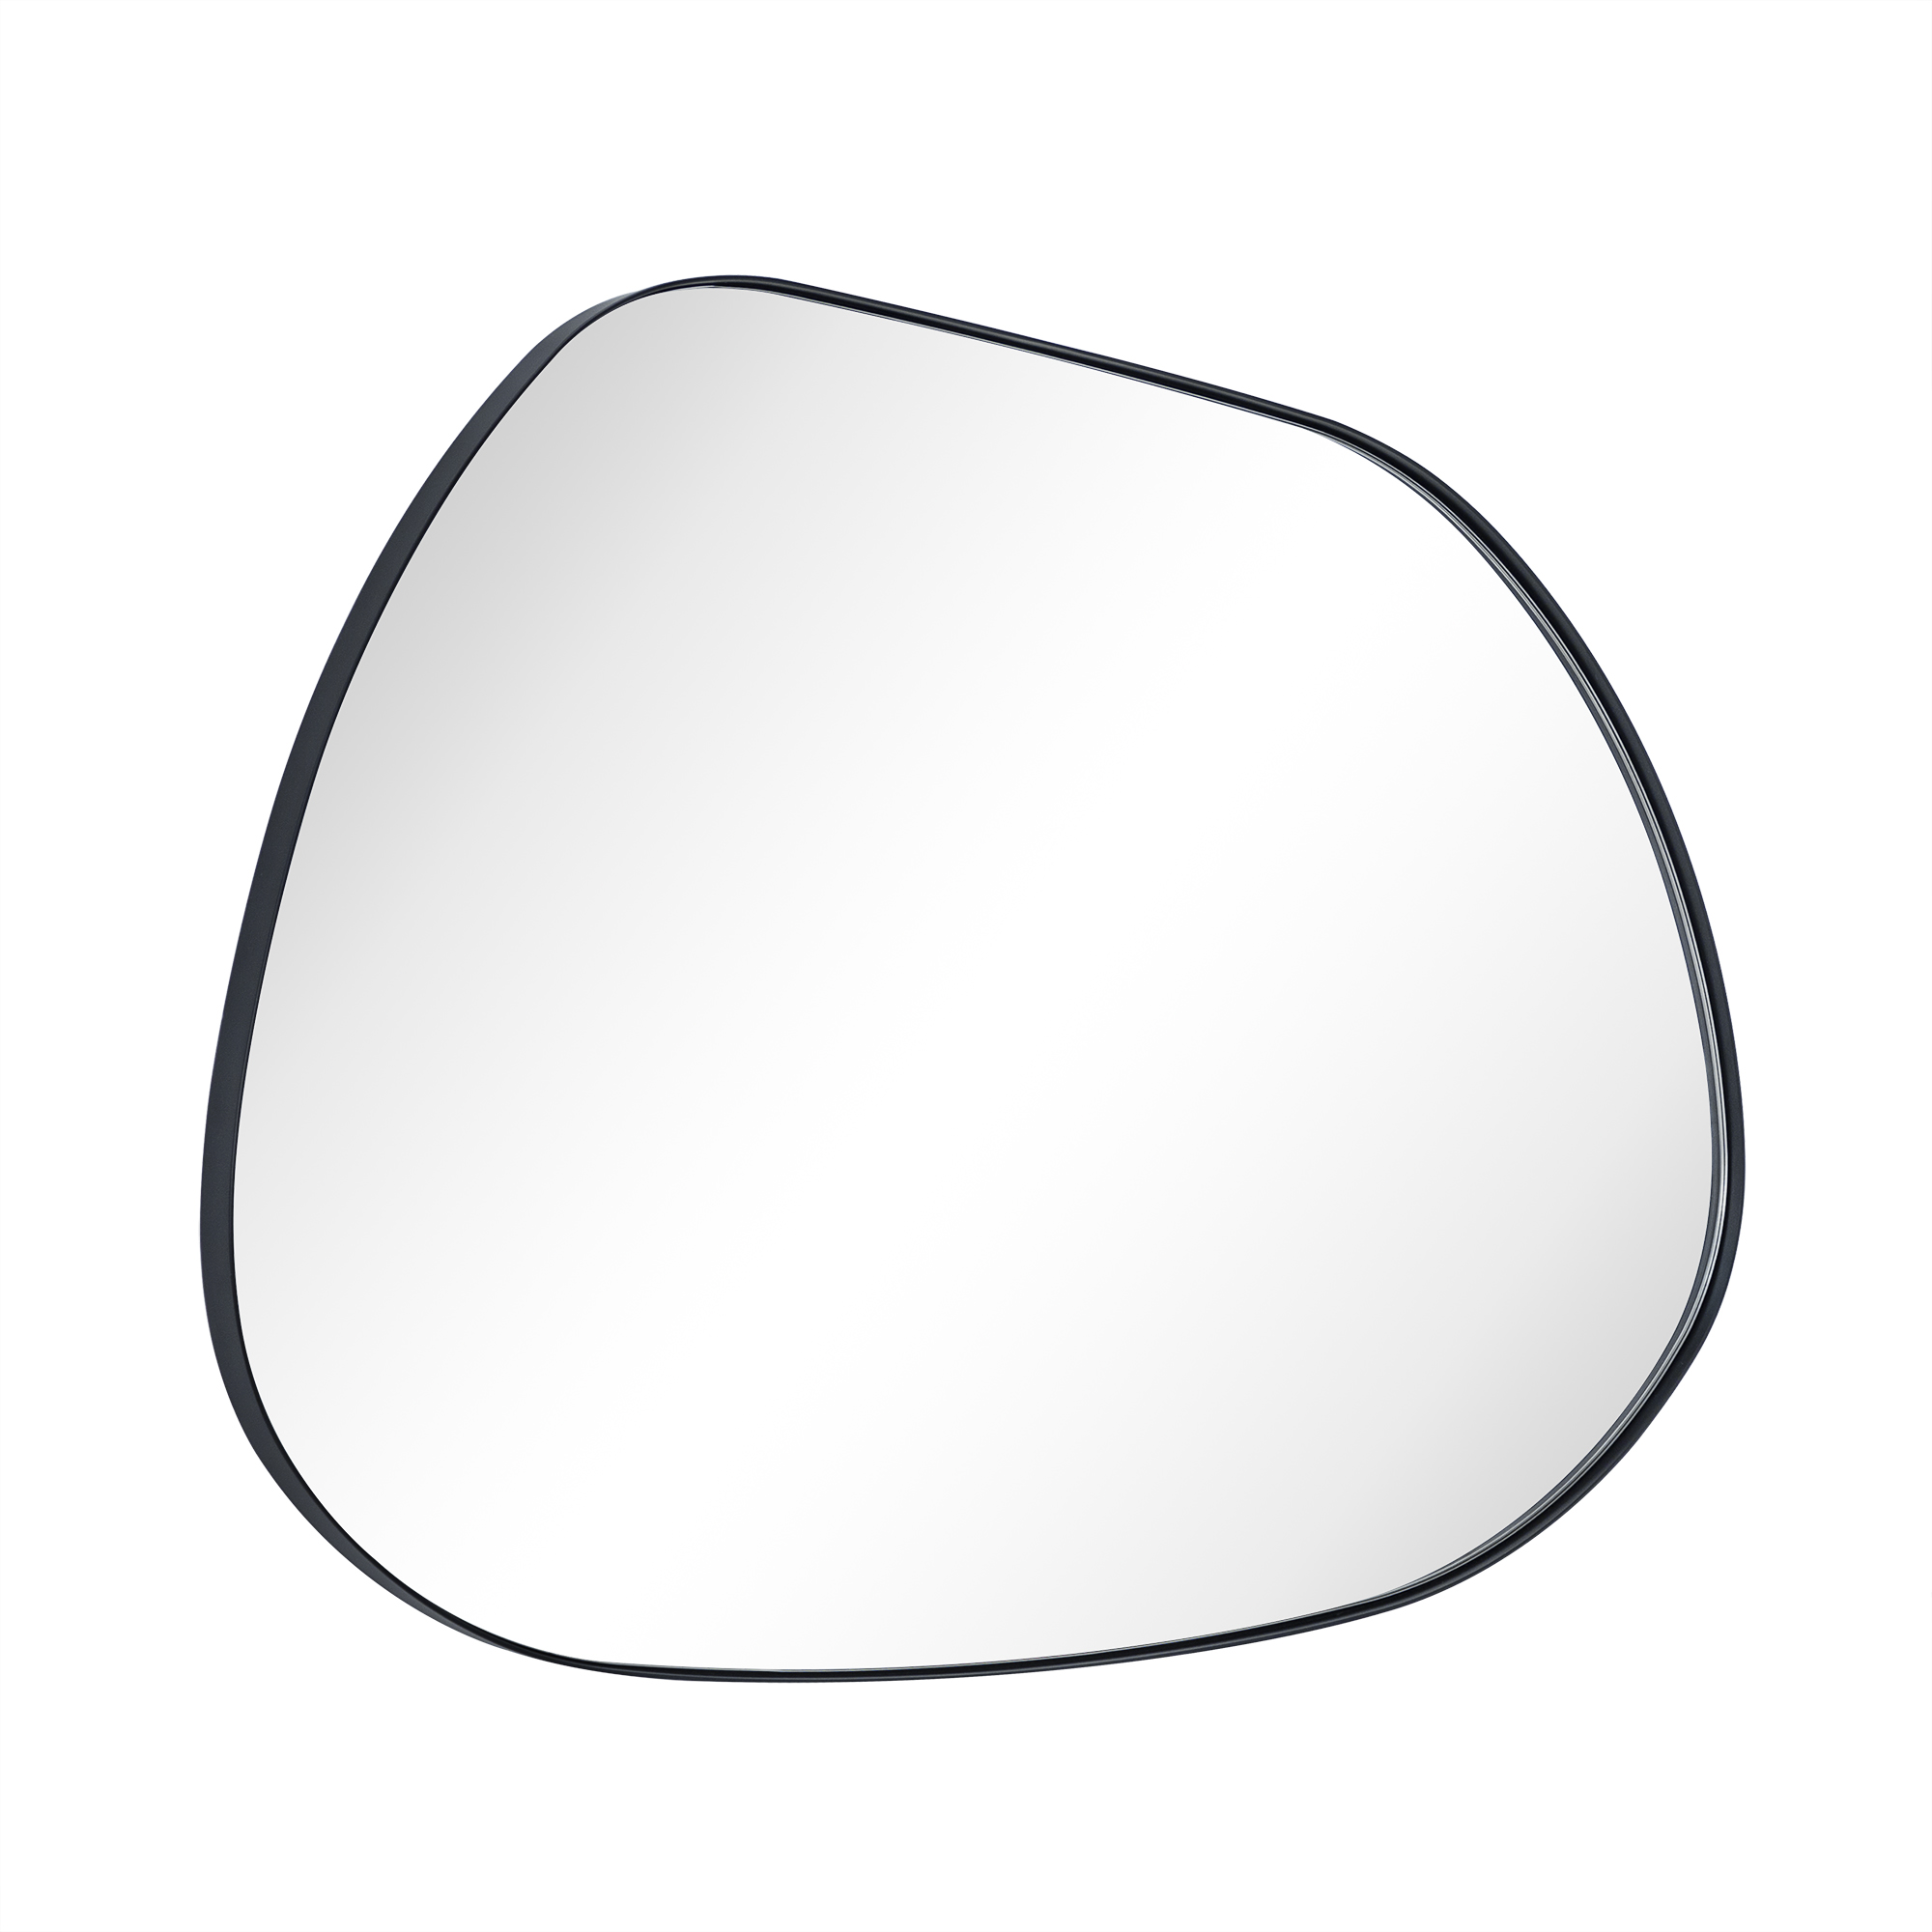 Bertlinde asymmetrical wall mirror irregular shaped mirror for living room, bathroom or entry